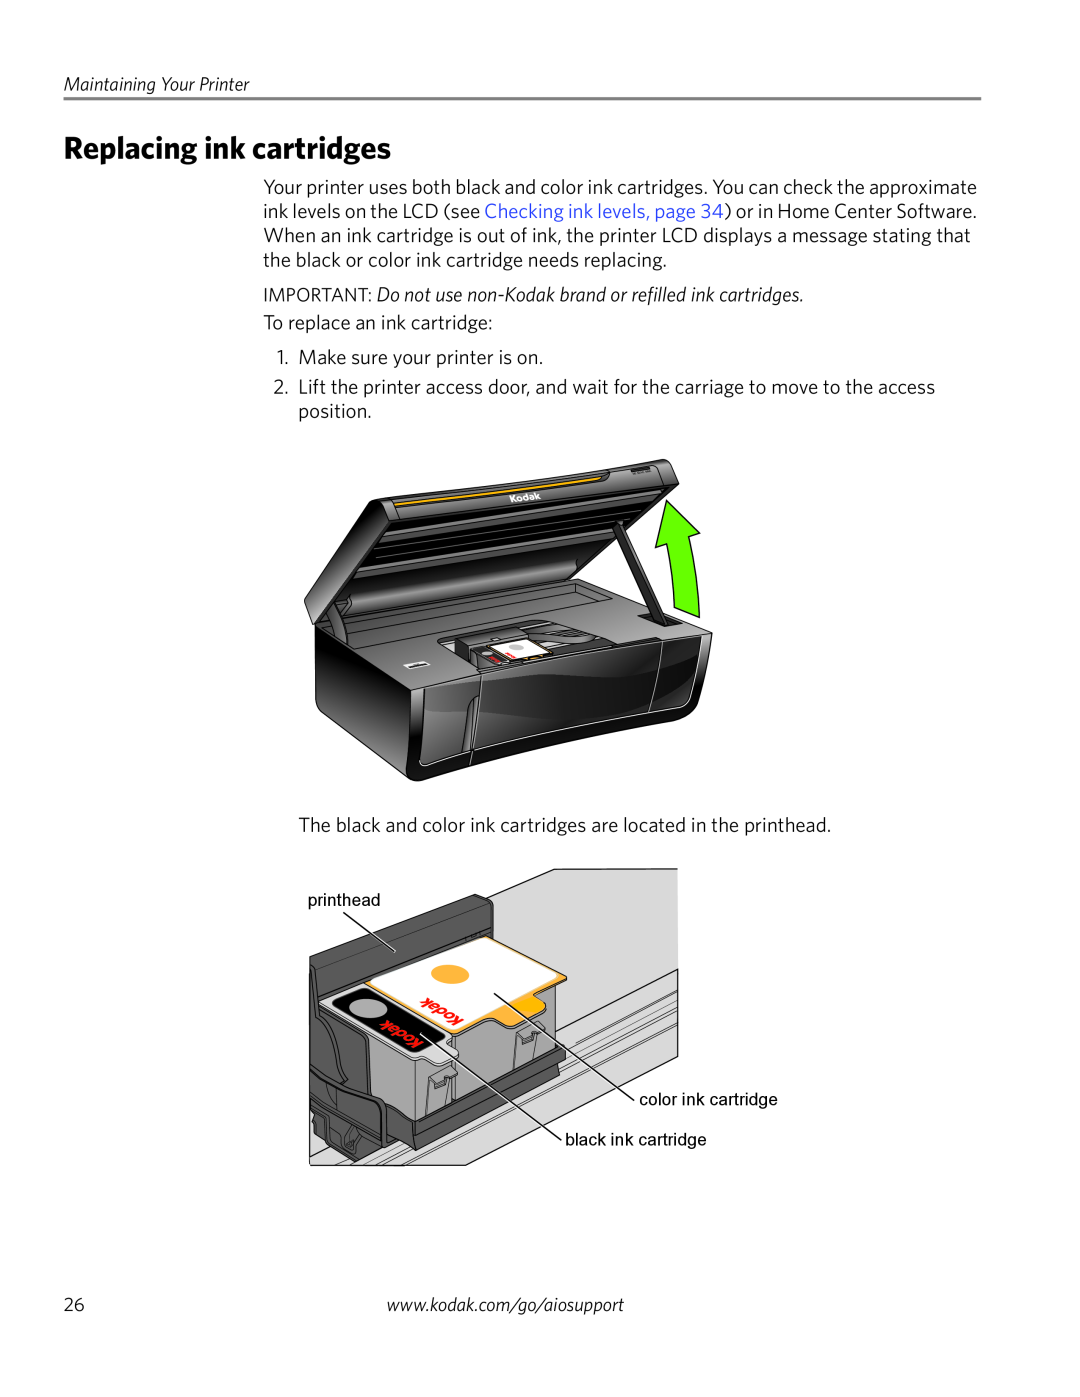 Kodak ESP 3250, ESP 3260 manual Replacing ink cartridges, IMPORTANT Do not use non-Kodak brand or refilled ink cartridges 